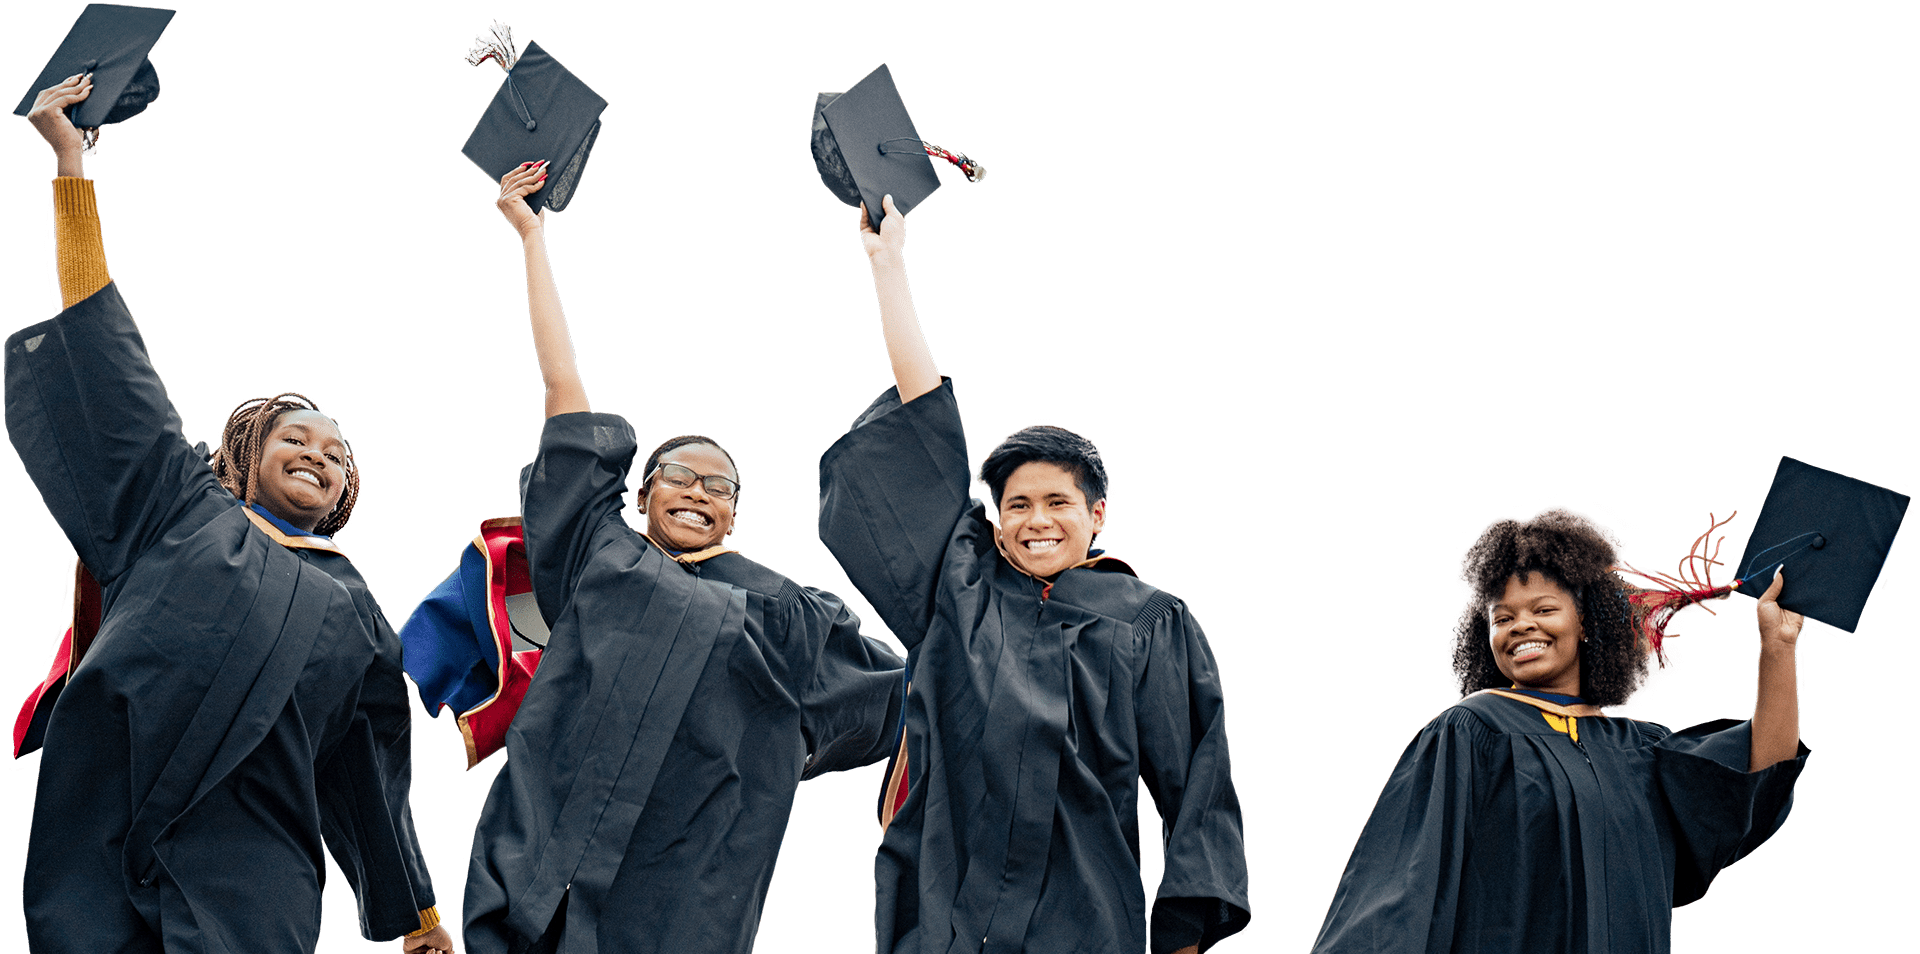 University graduates jumping in the air